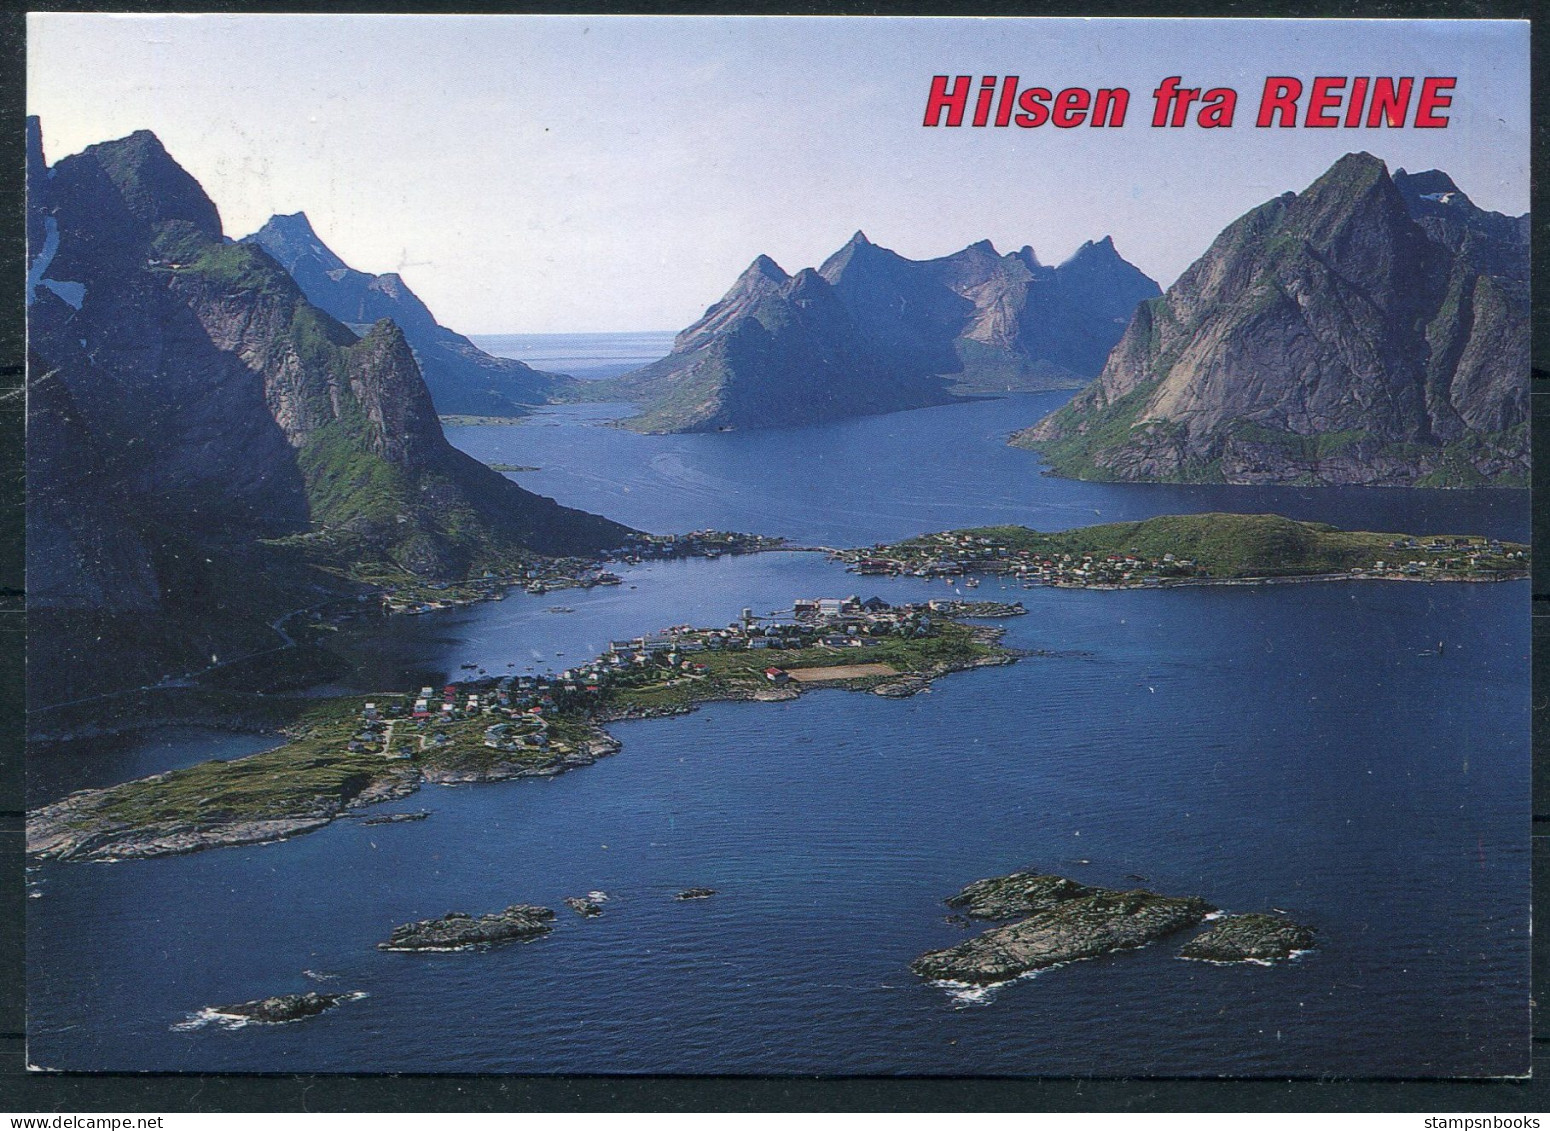 1999 Norway M/S VESTERALEN OVDS Polarsirkelen Ship Reine Postcard - Denmark - Storia Postale